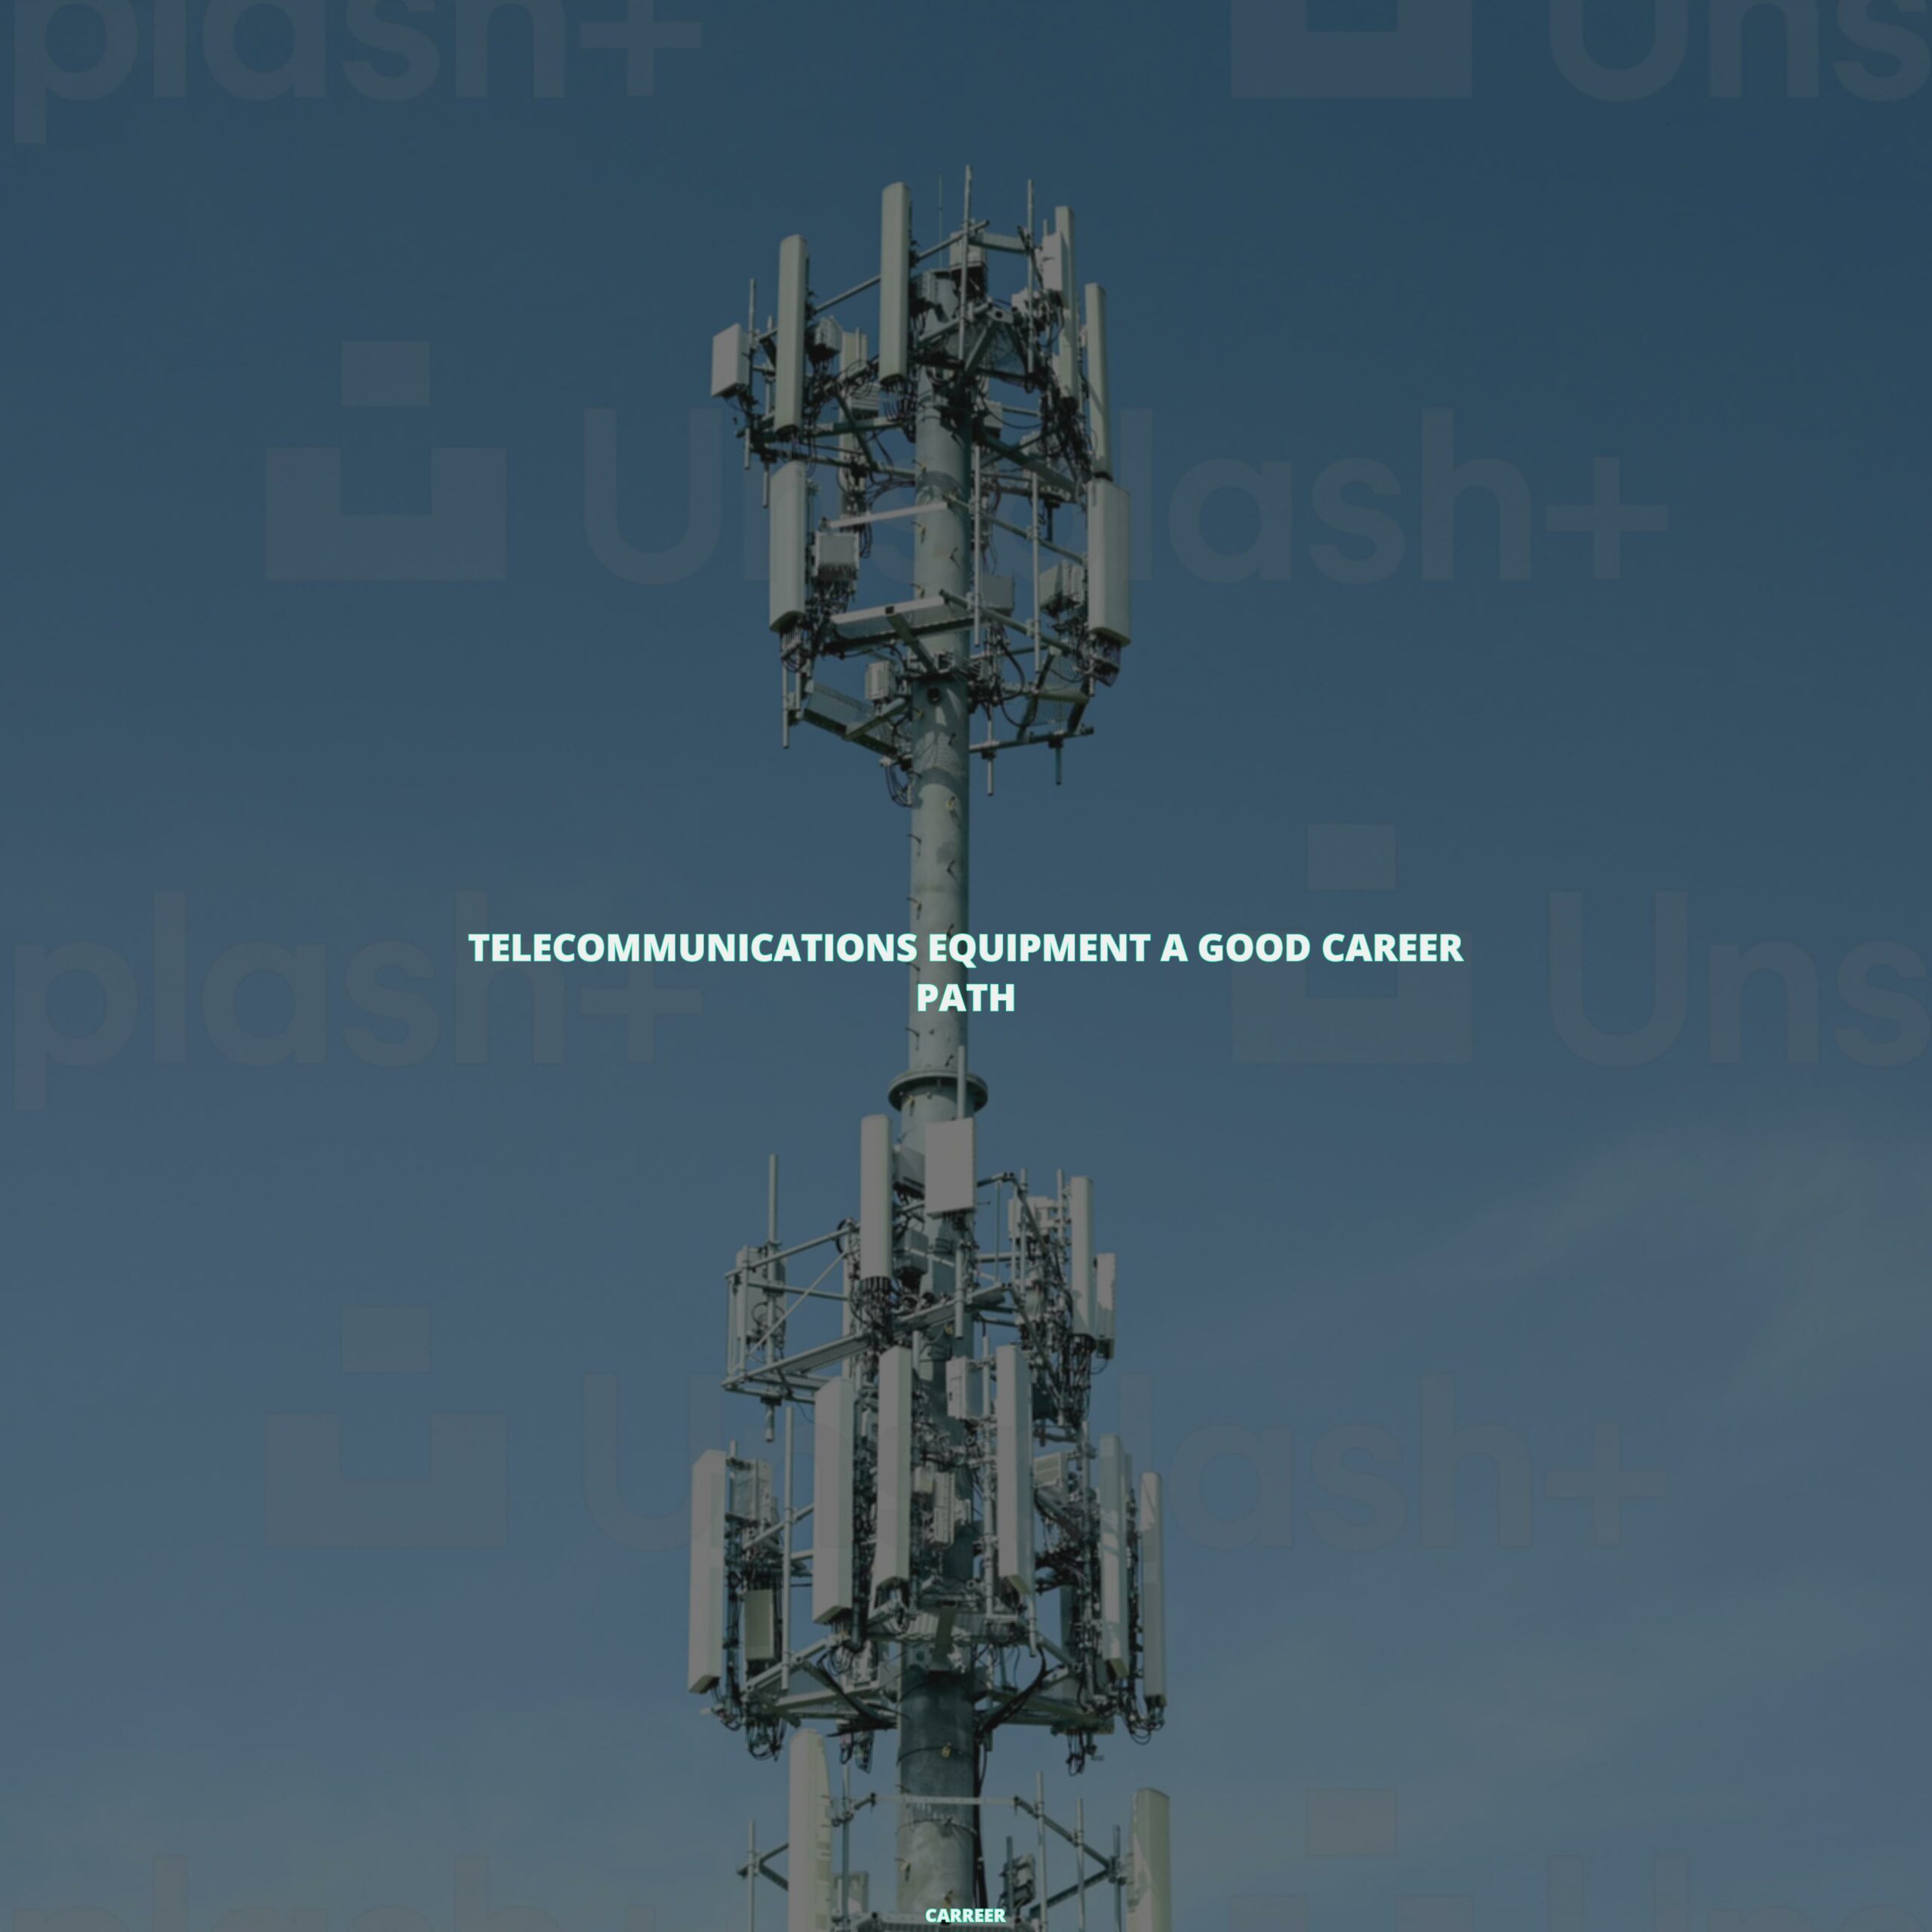 Telecommunications equipment a good career path